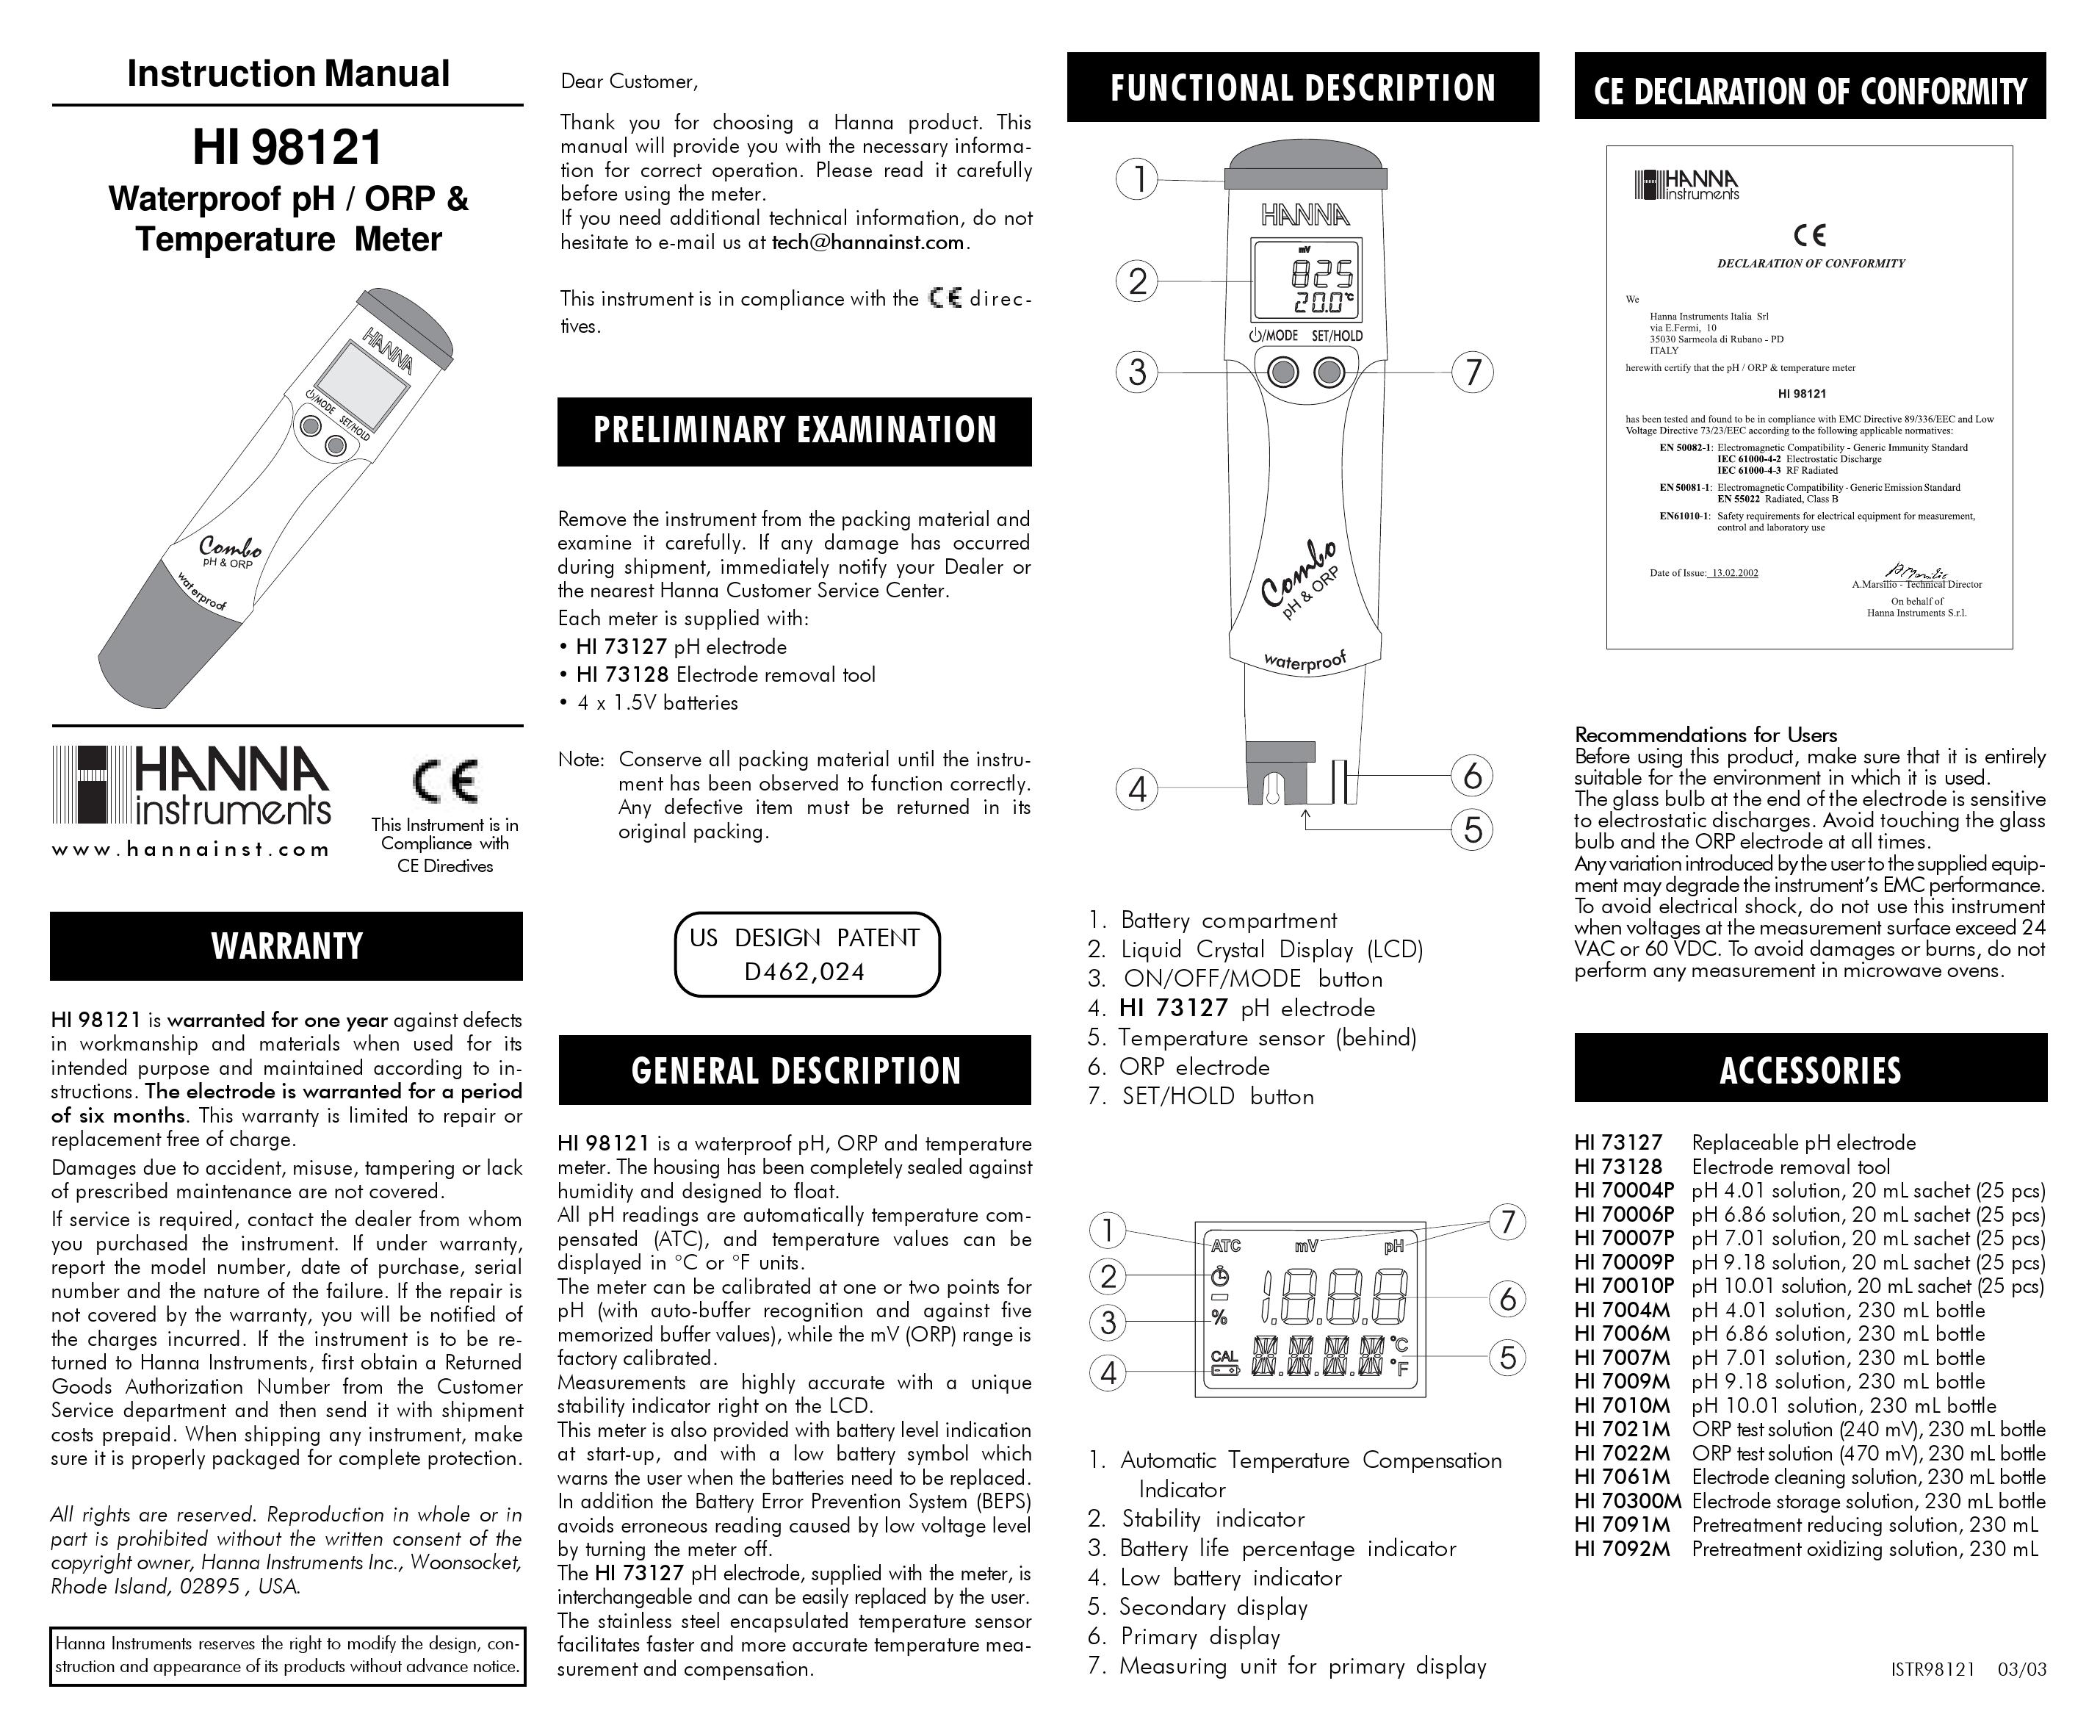 Mad Catz HI 98121 Thermometer User Manual